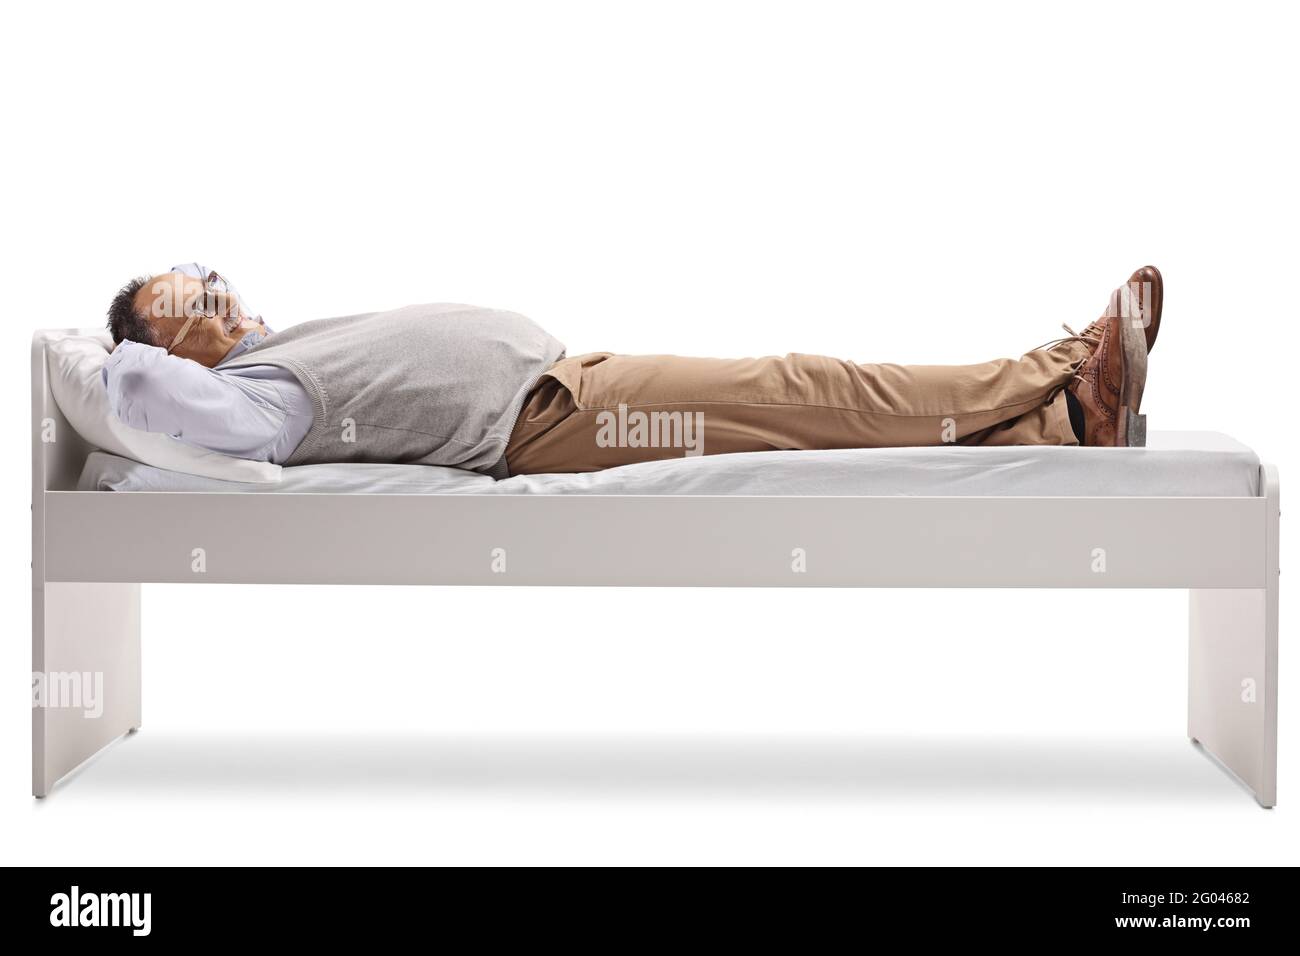 Elderly man sleeping on a single bed isolated on white background Stock Photo